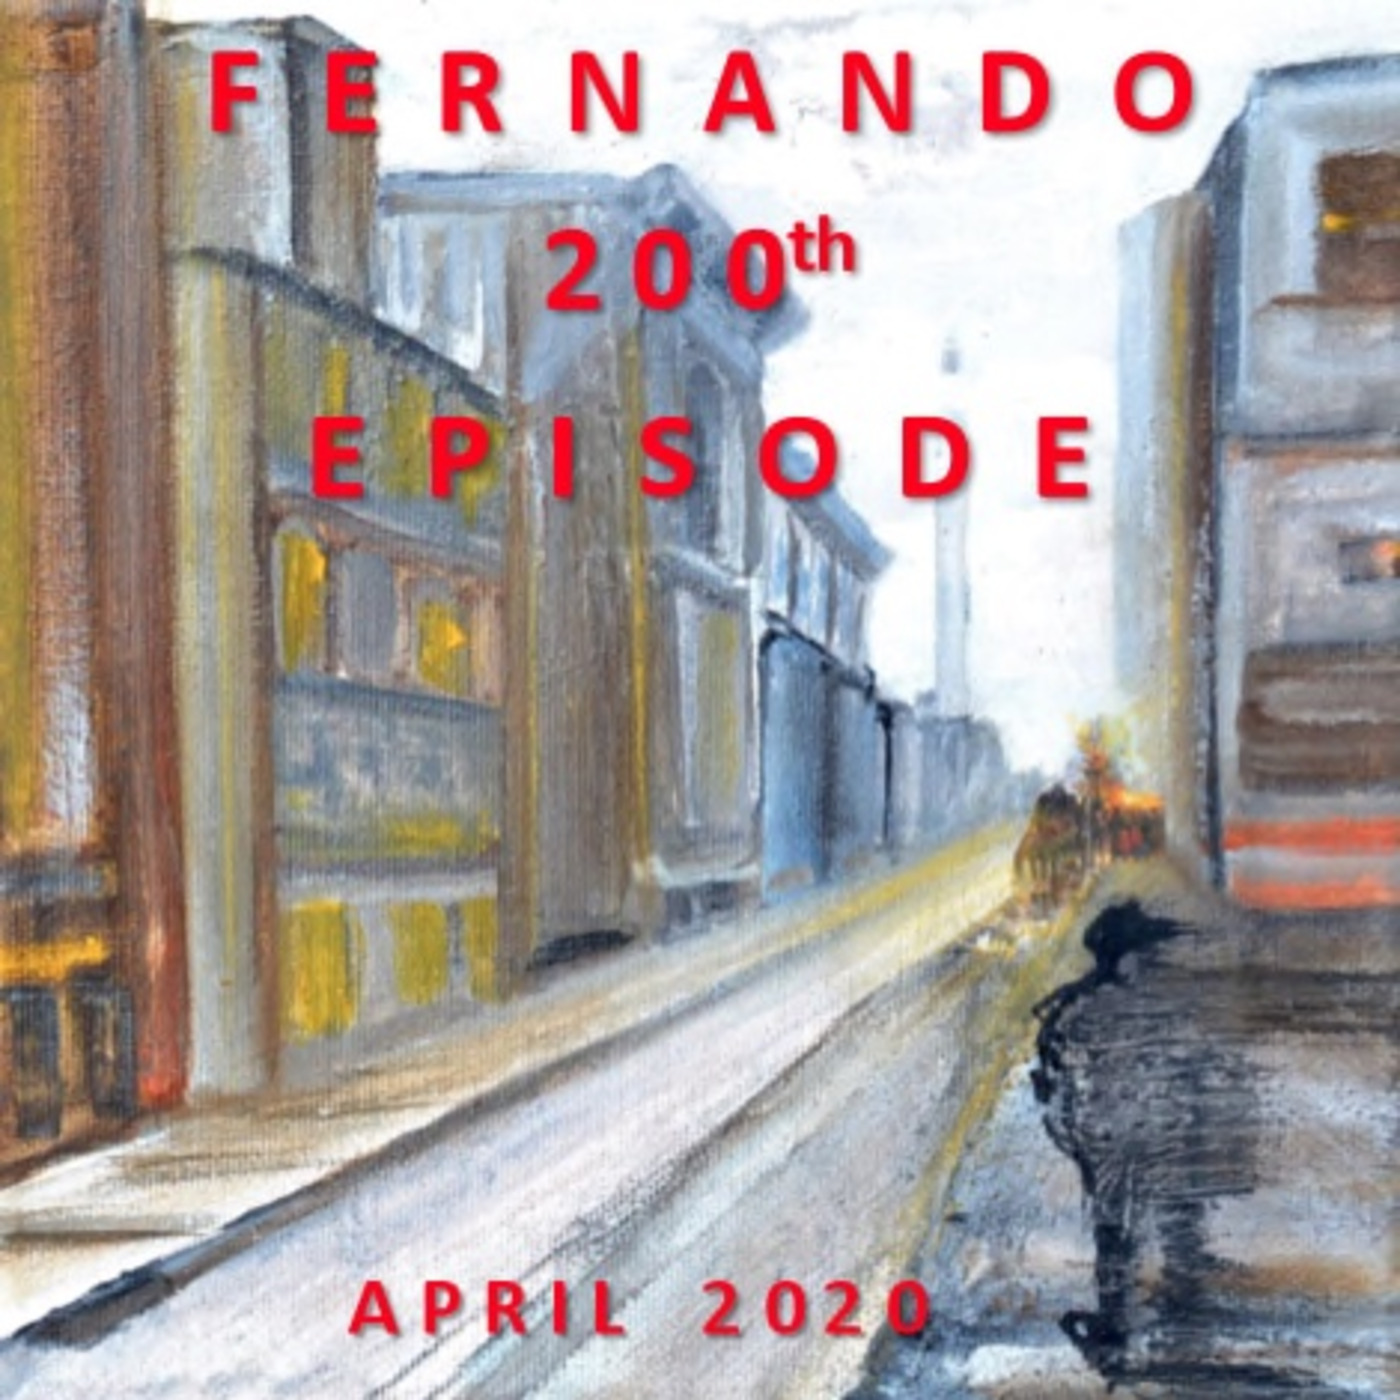 Fernando - 200th Podcast Episode